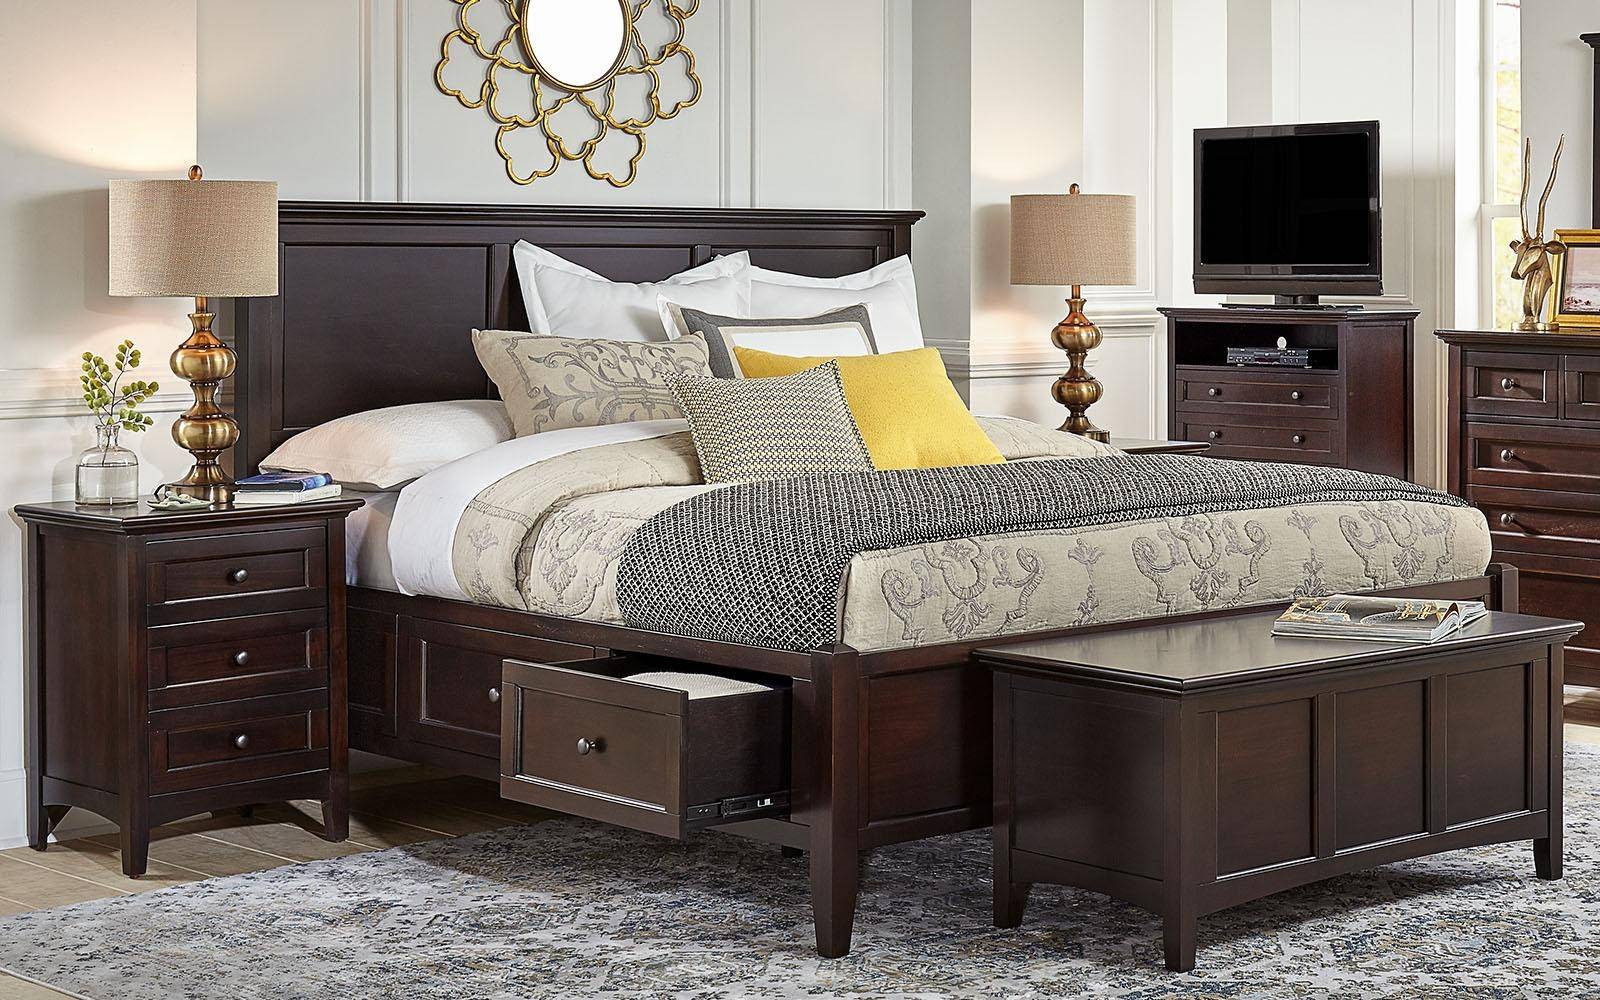 ebay site to buy bedroom furniture